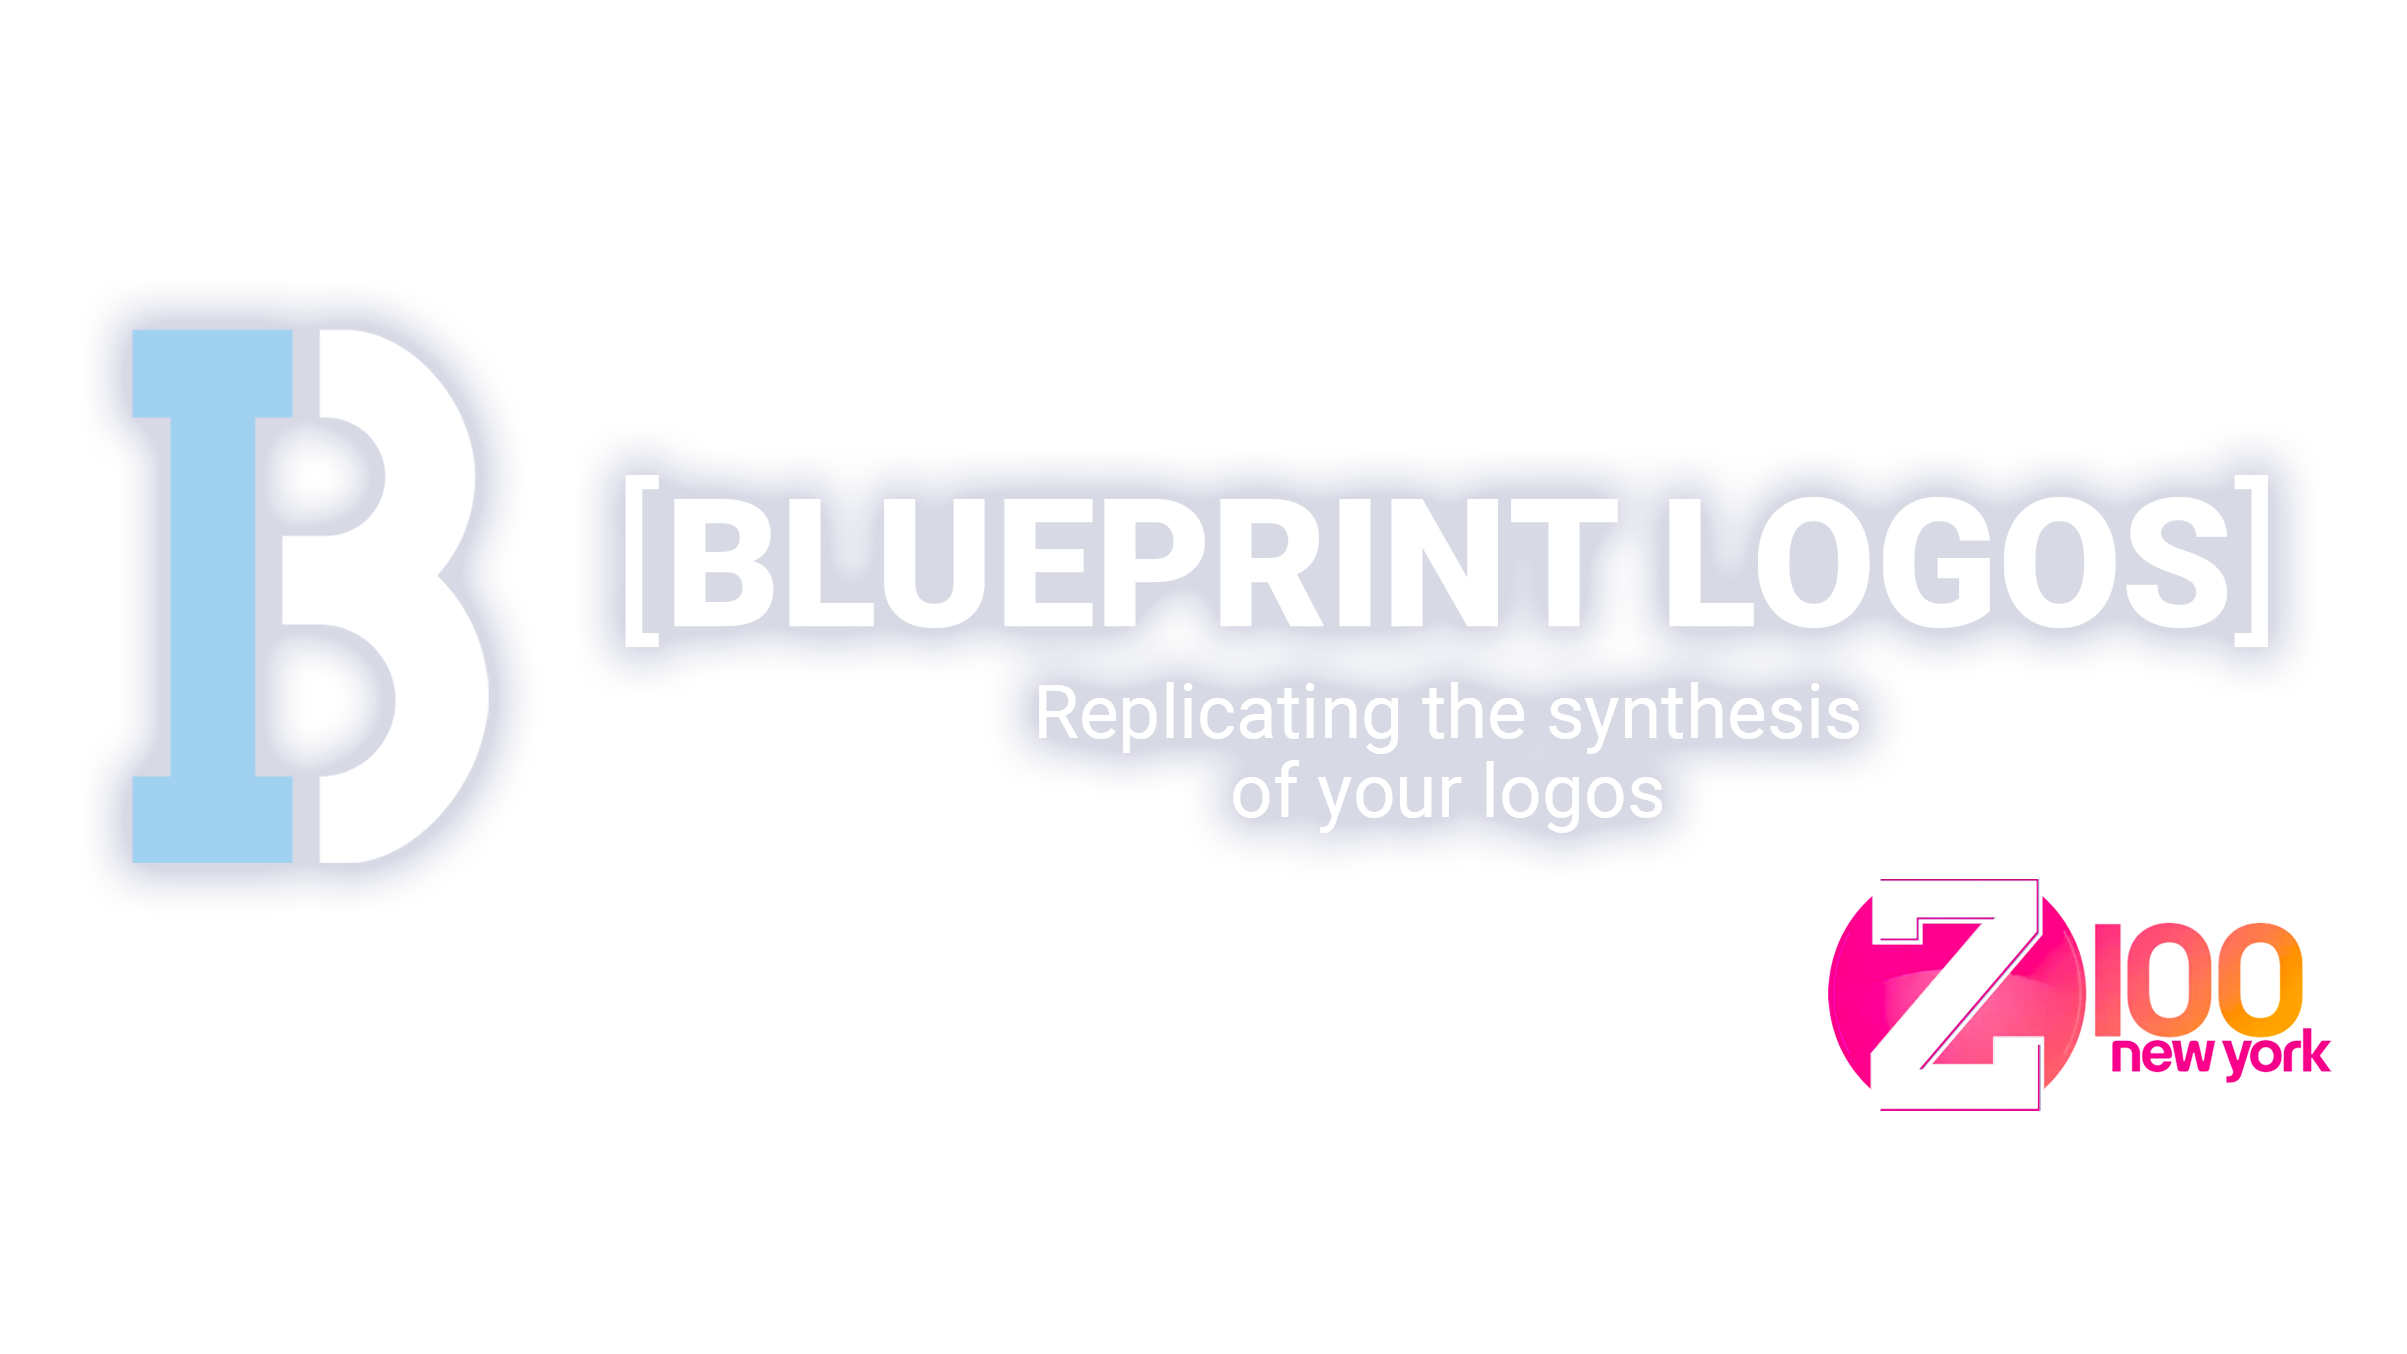 Blueprint Logos: Replicating the synthesis of your logos - KDWB 101.3